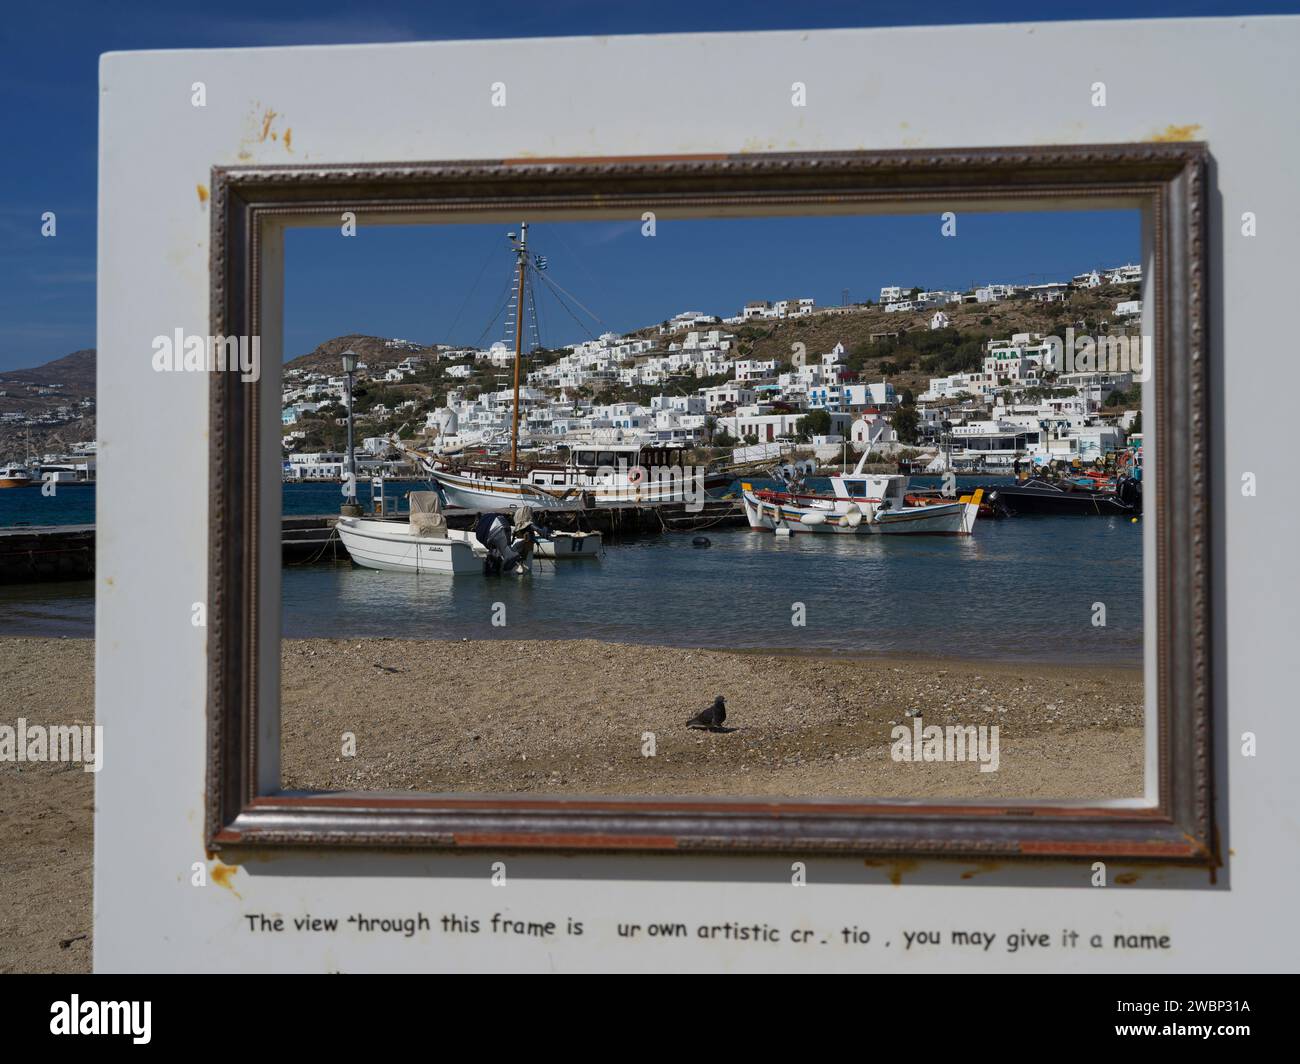 Framed image of boats in a harbor along the Mykonos Island coastline, Greece Stock Photo